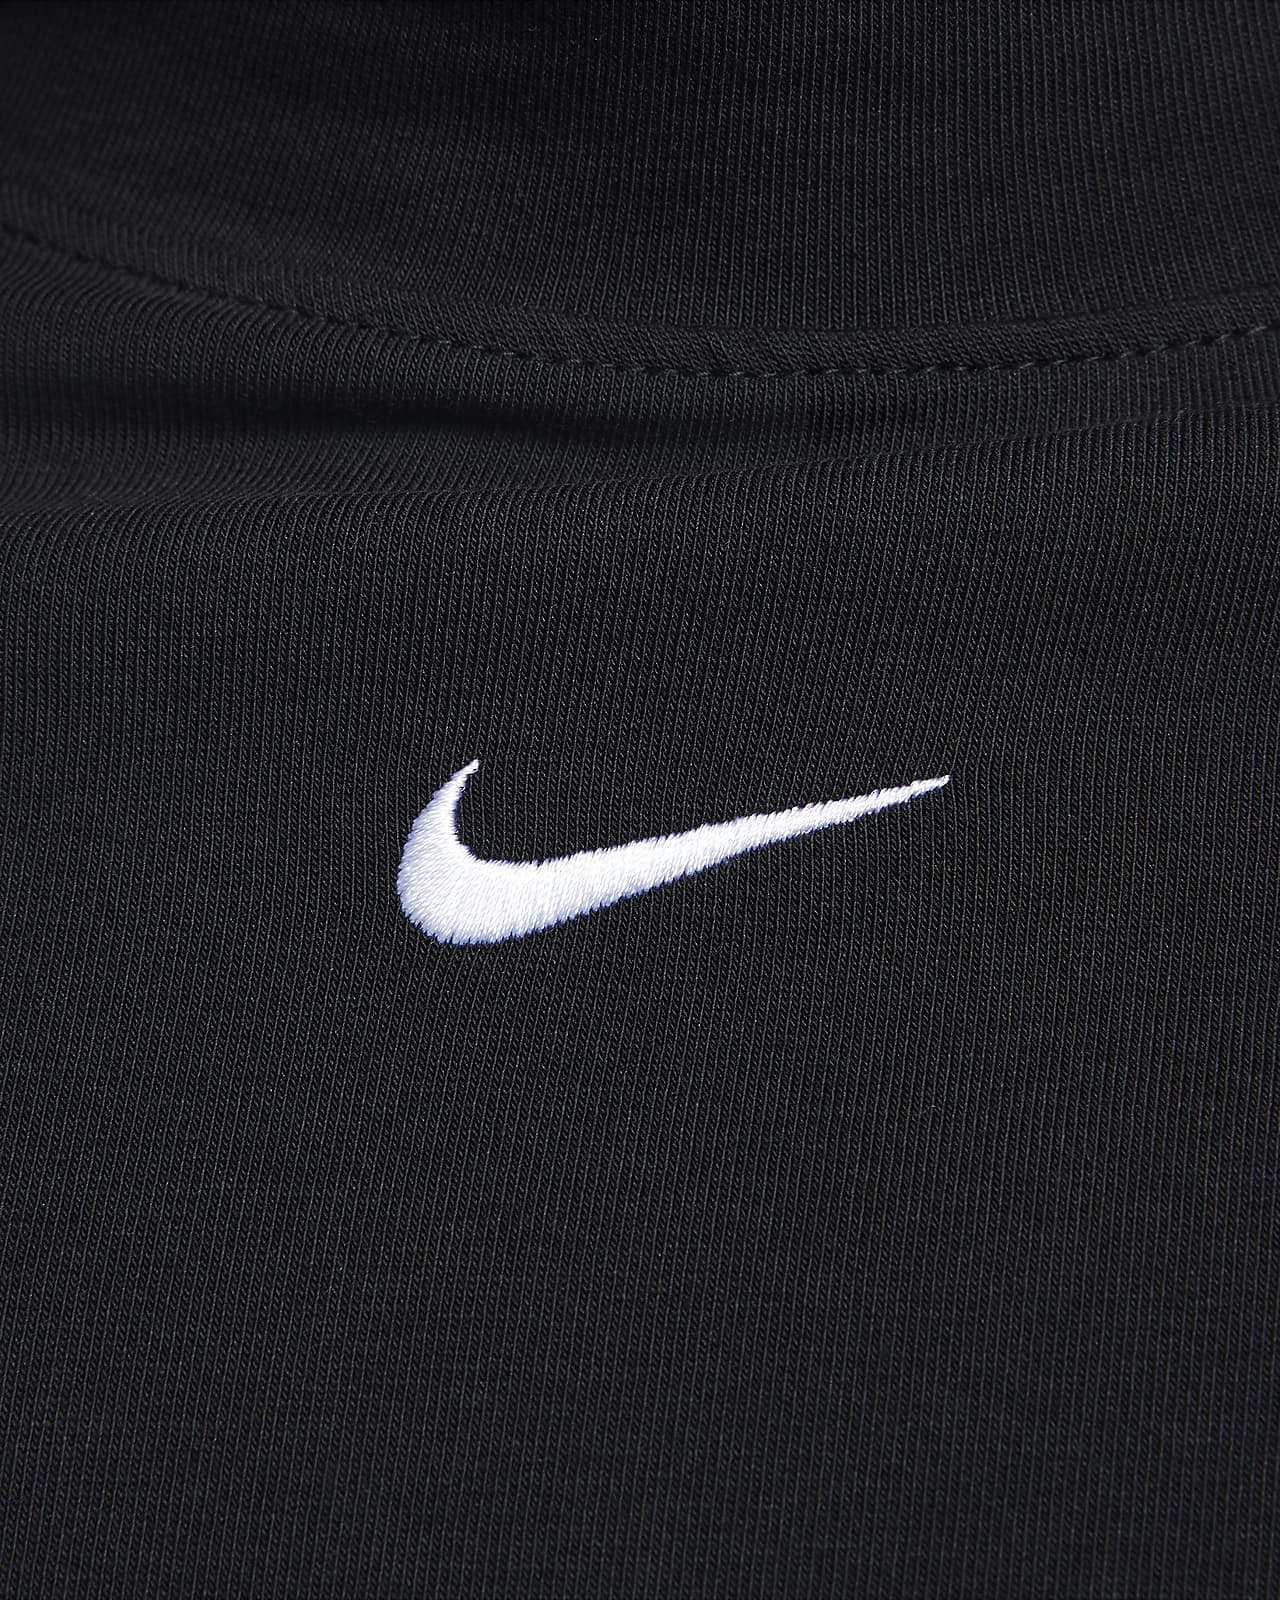 Nike Sportswear Women\'s Collection Long-Sleeve Top. Mock Essentials